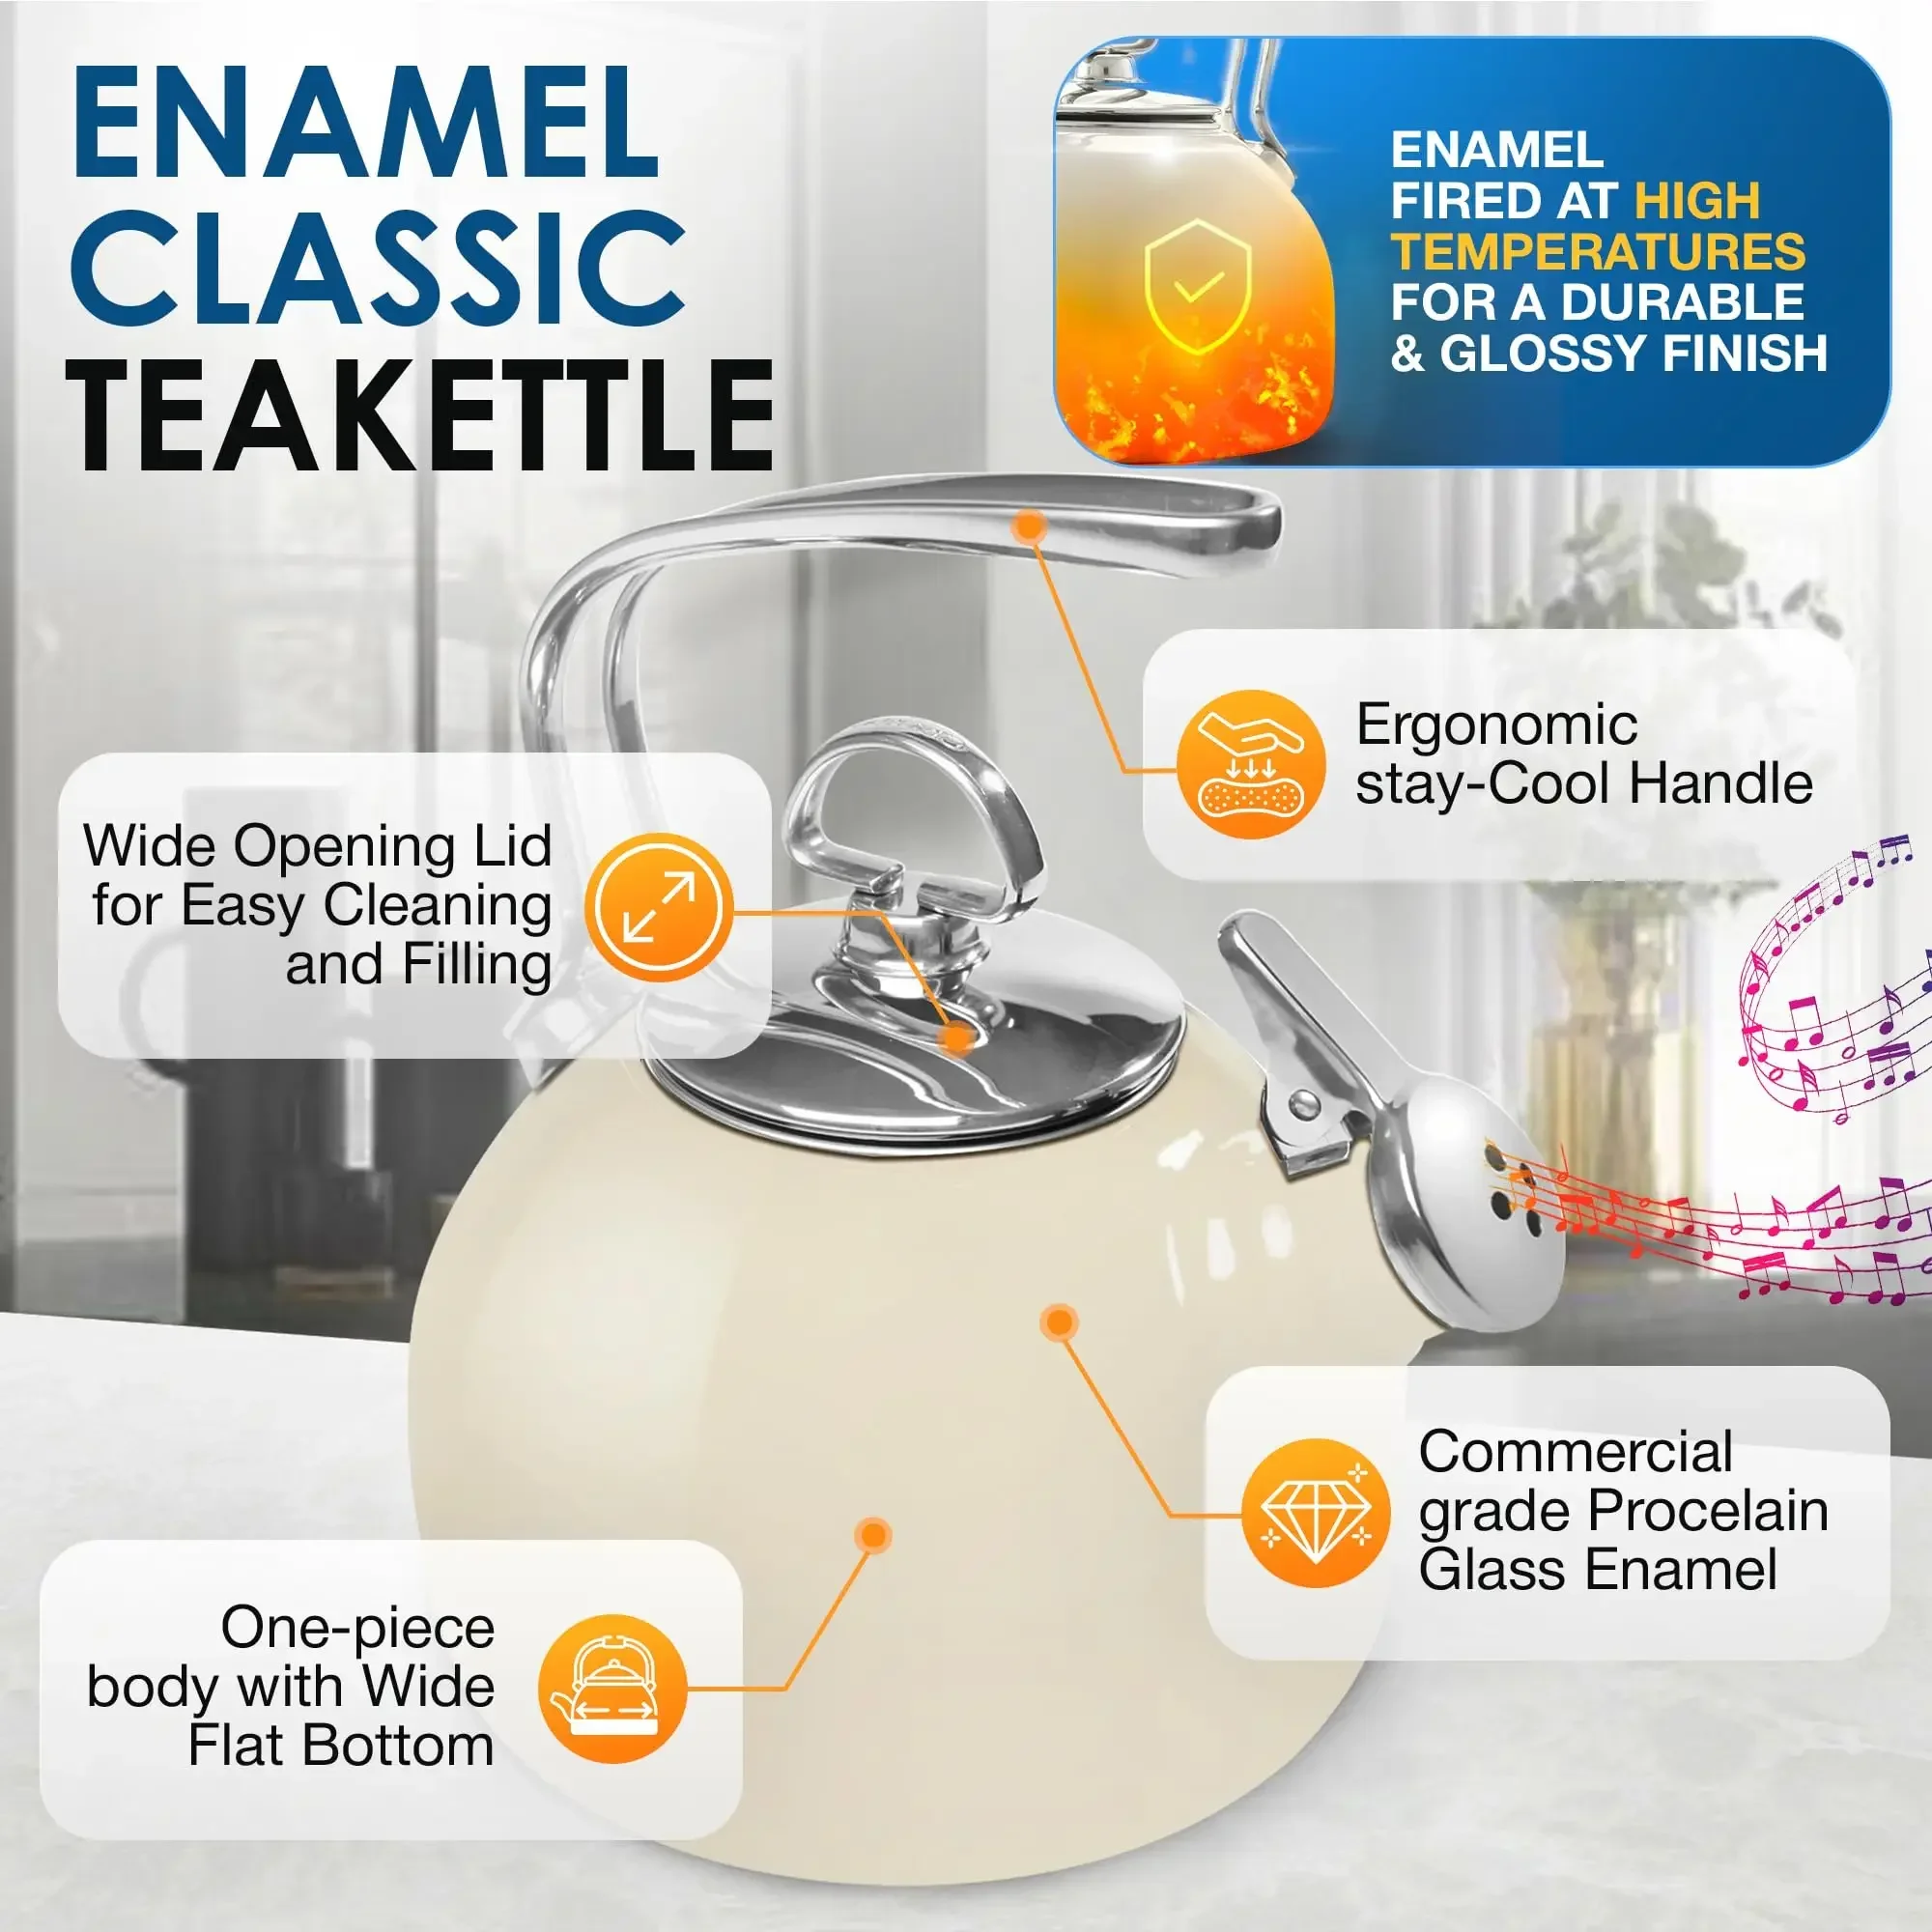 

Chantal Classic Teakettle, 1.8 QT, Enamel On Steel, 2-Tone Harmonica Whistle, Rapid Boil and Even Heating (Almond)